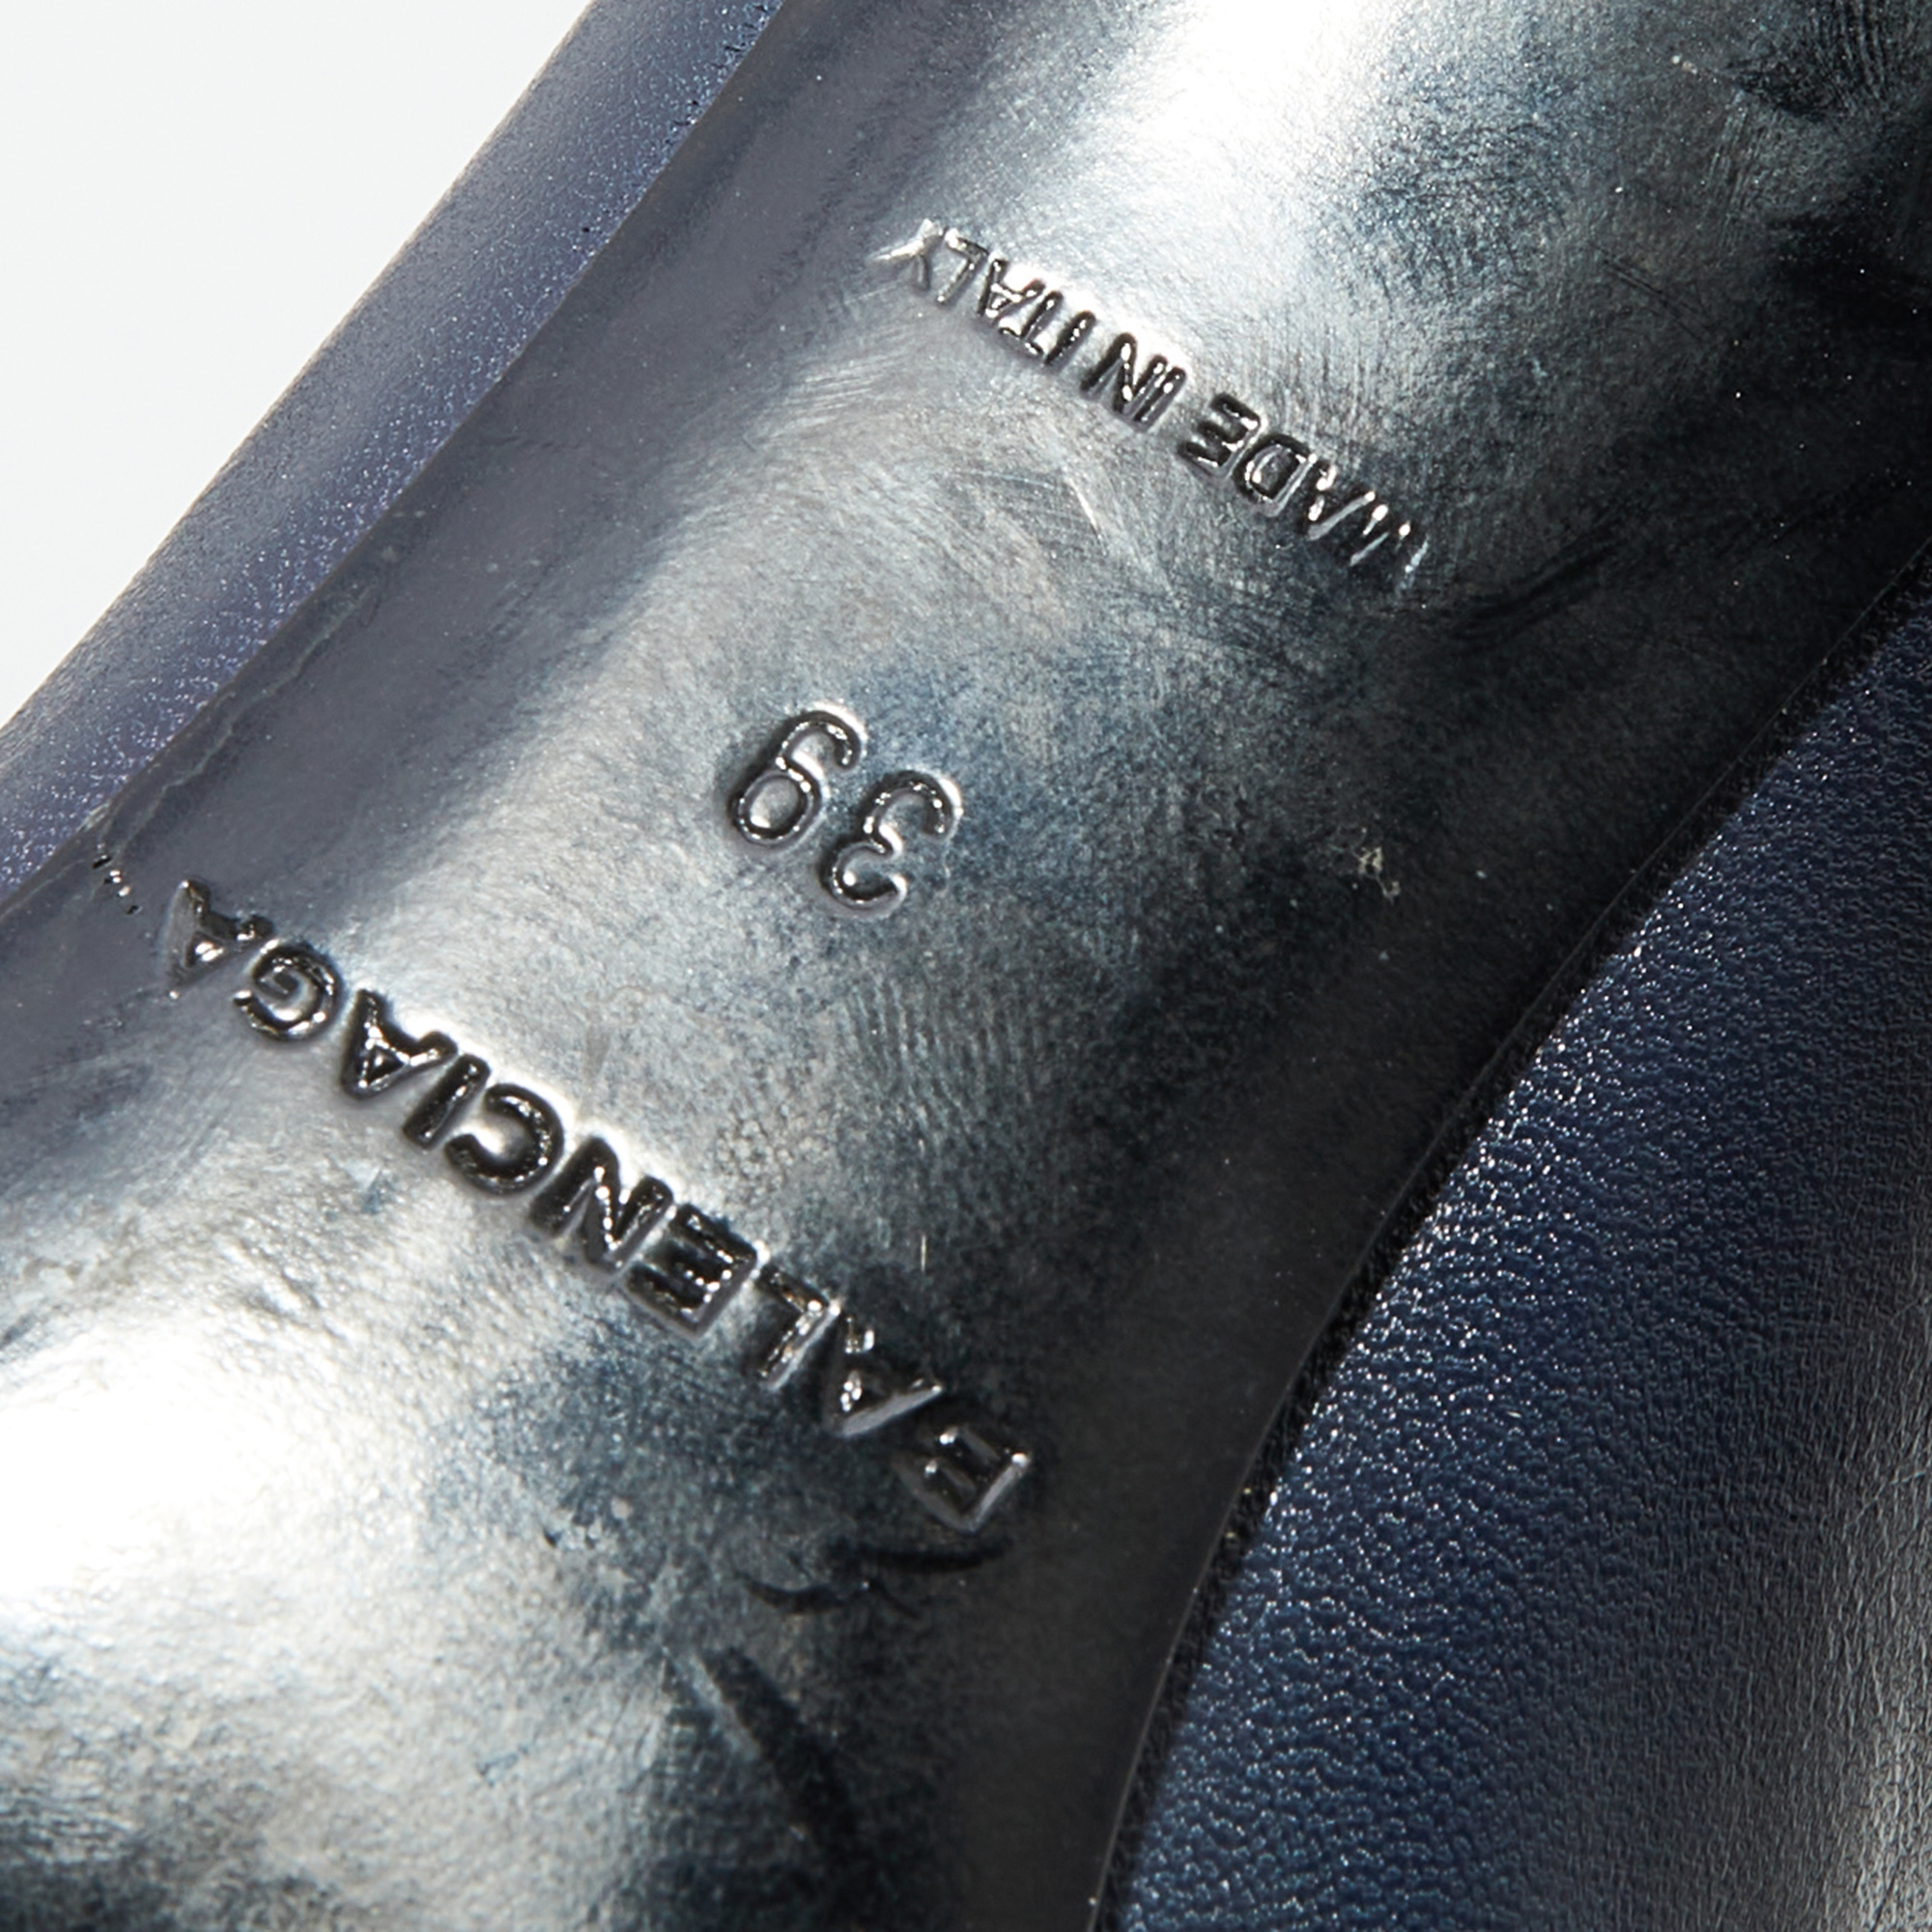 Balenciaga Navy Blue Leather Split Vamp Open Toe Booties Size 39